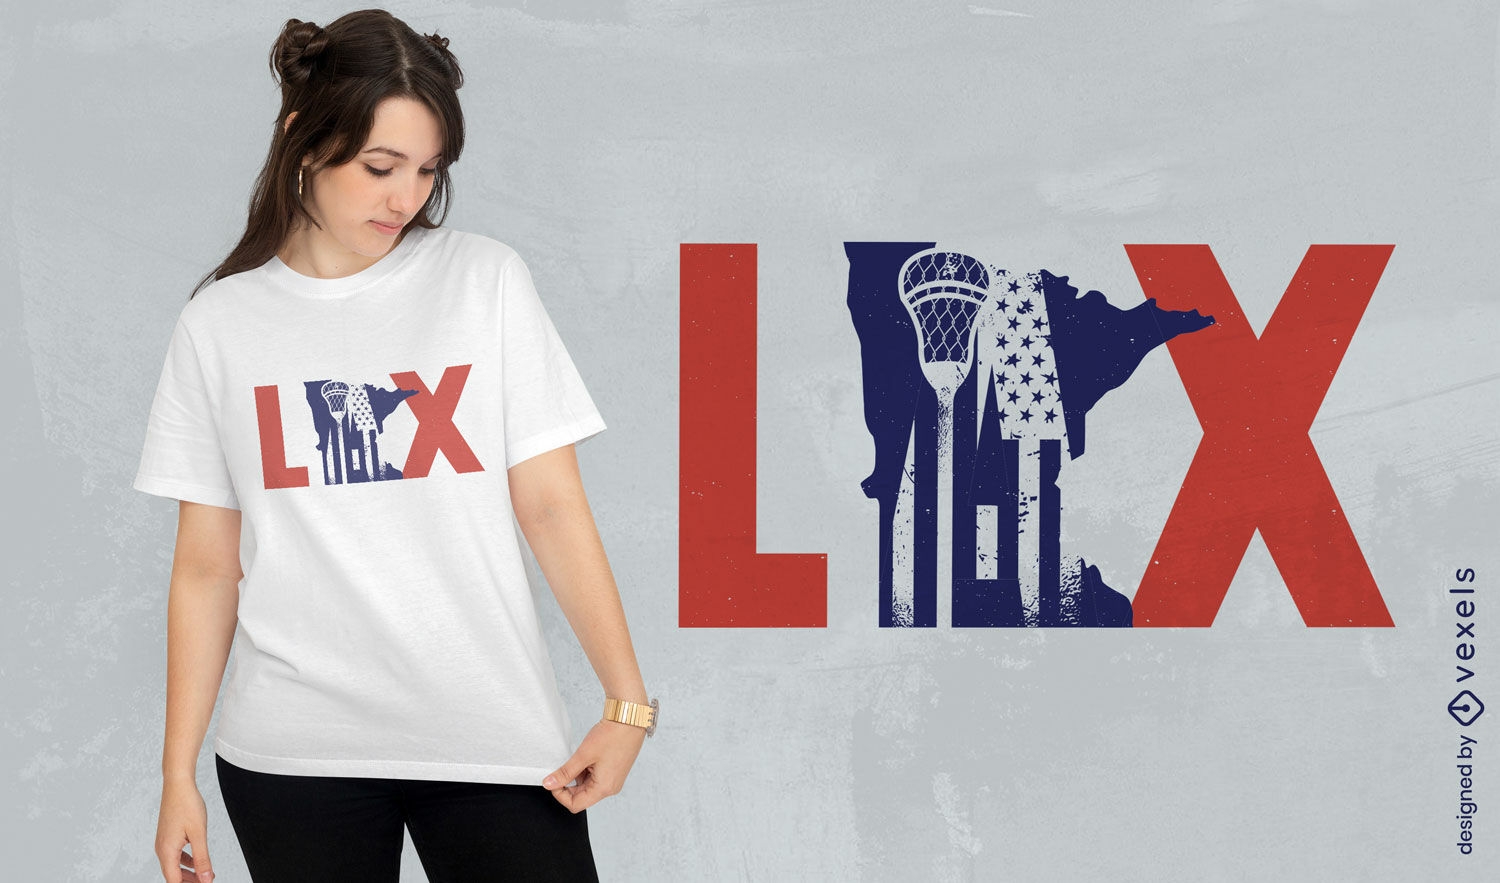 Lacrosse-Sport-Zitat-T-Shirt-Design